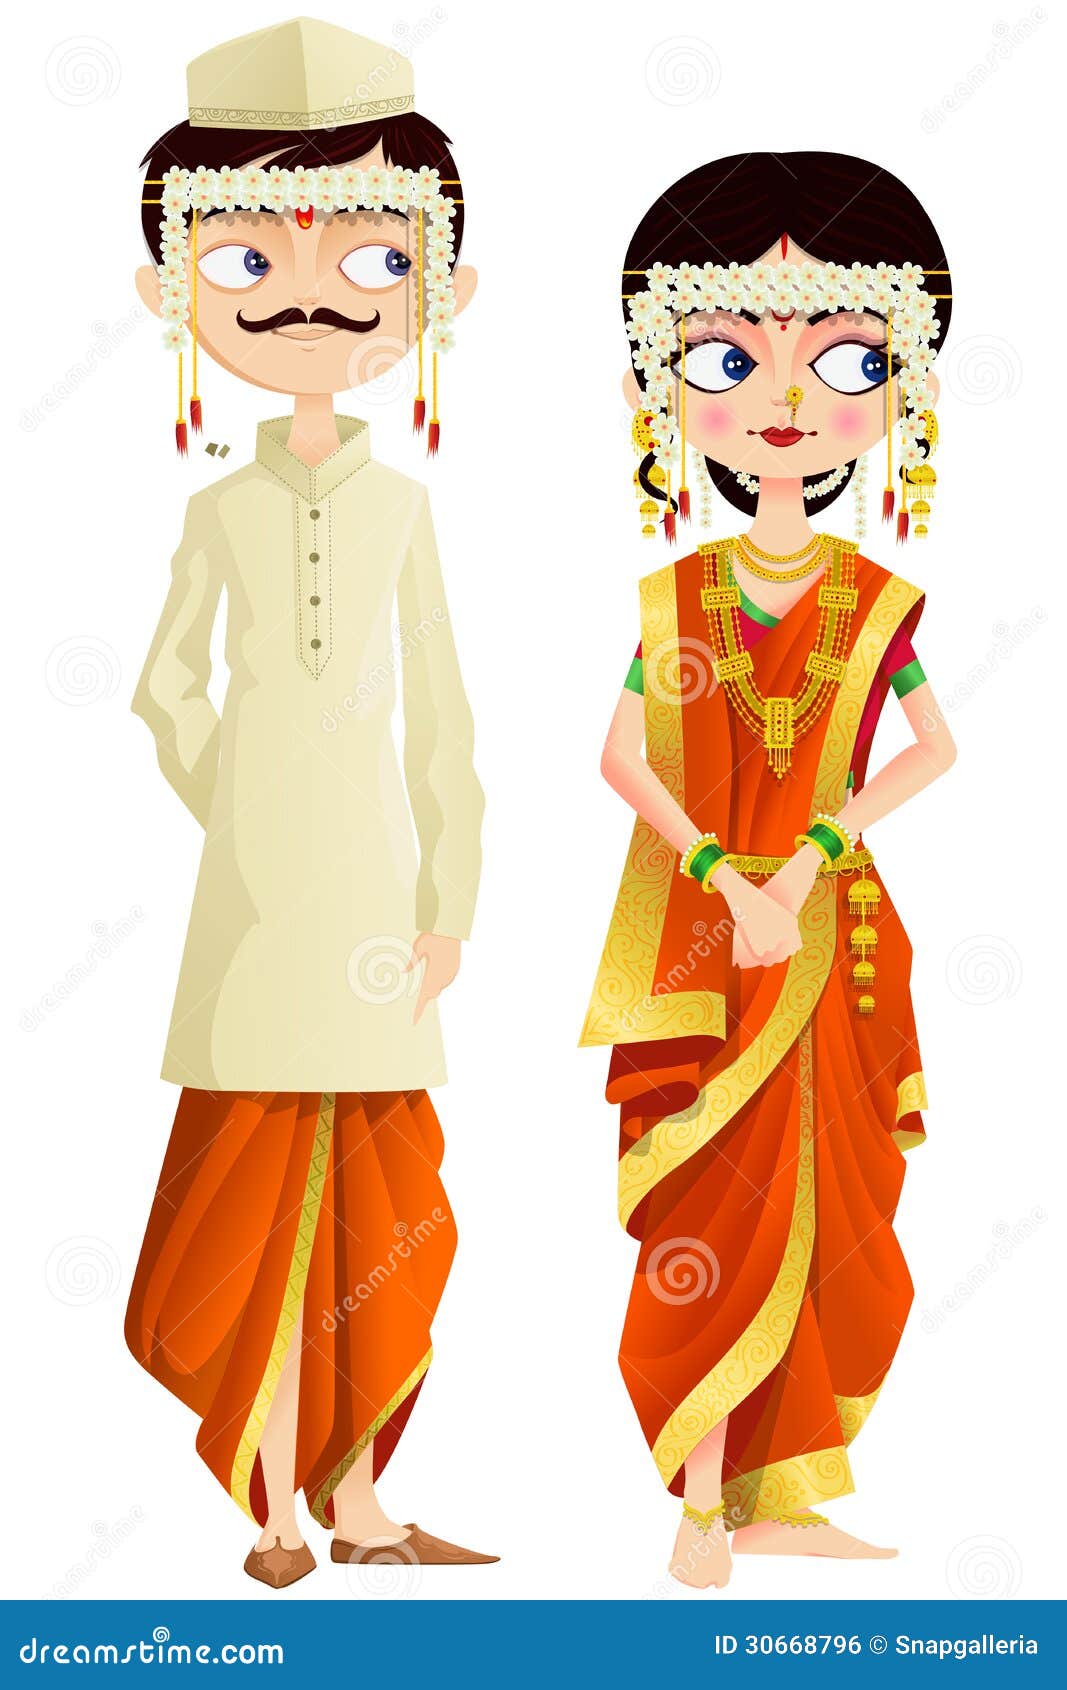 marathi wedding clipart free download - photo #1